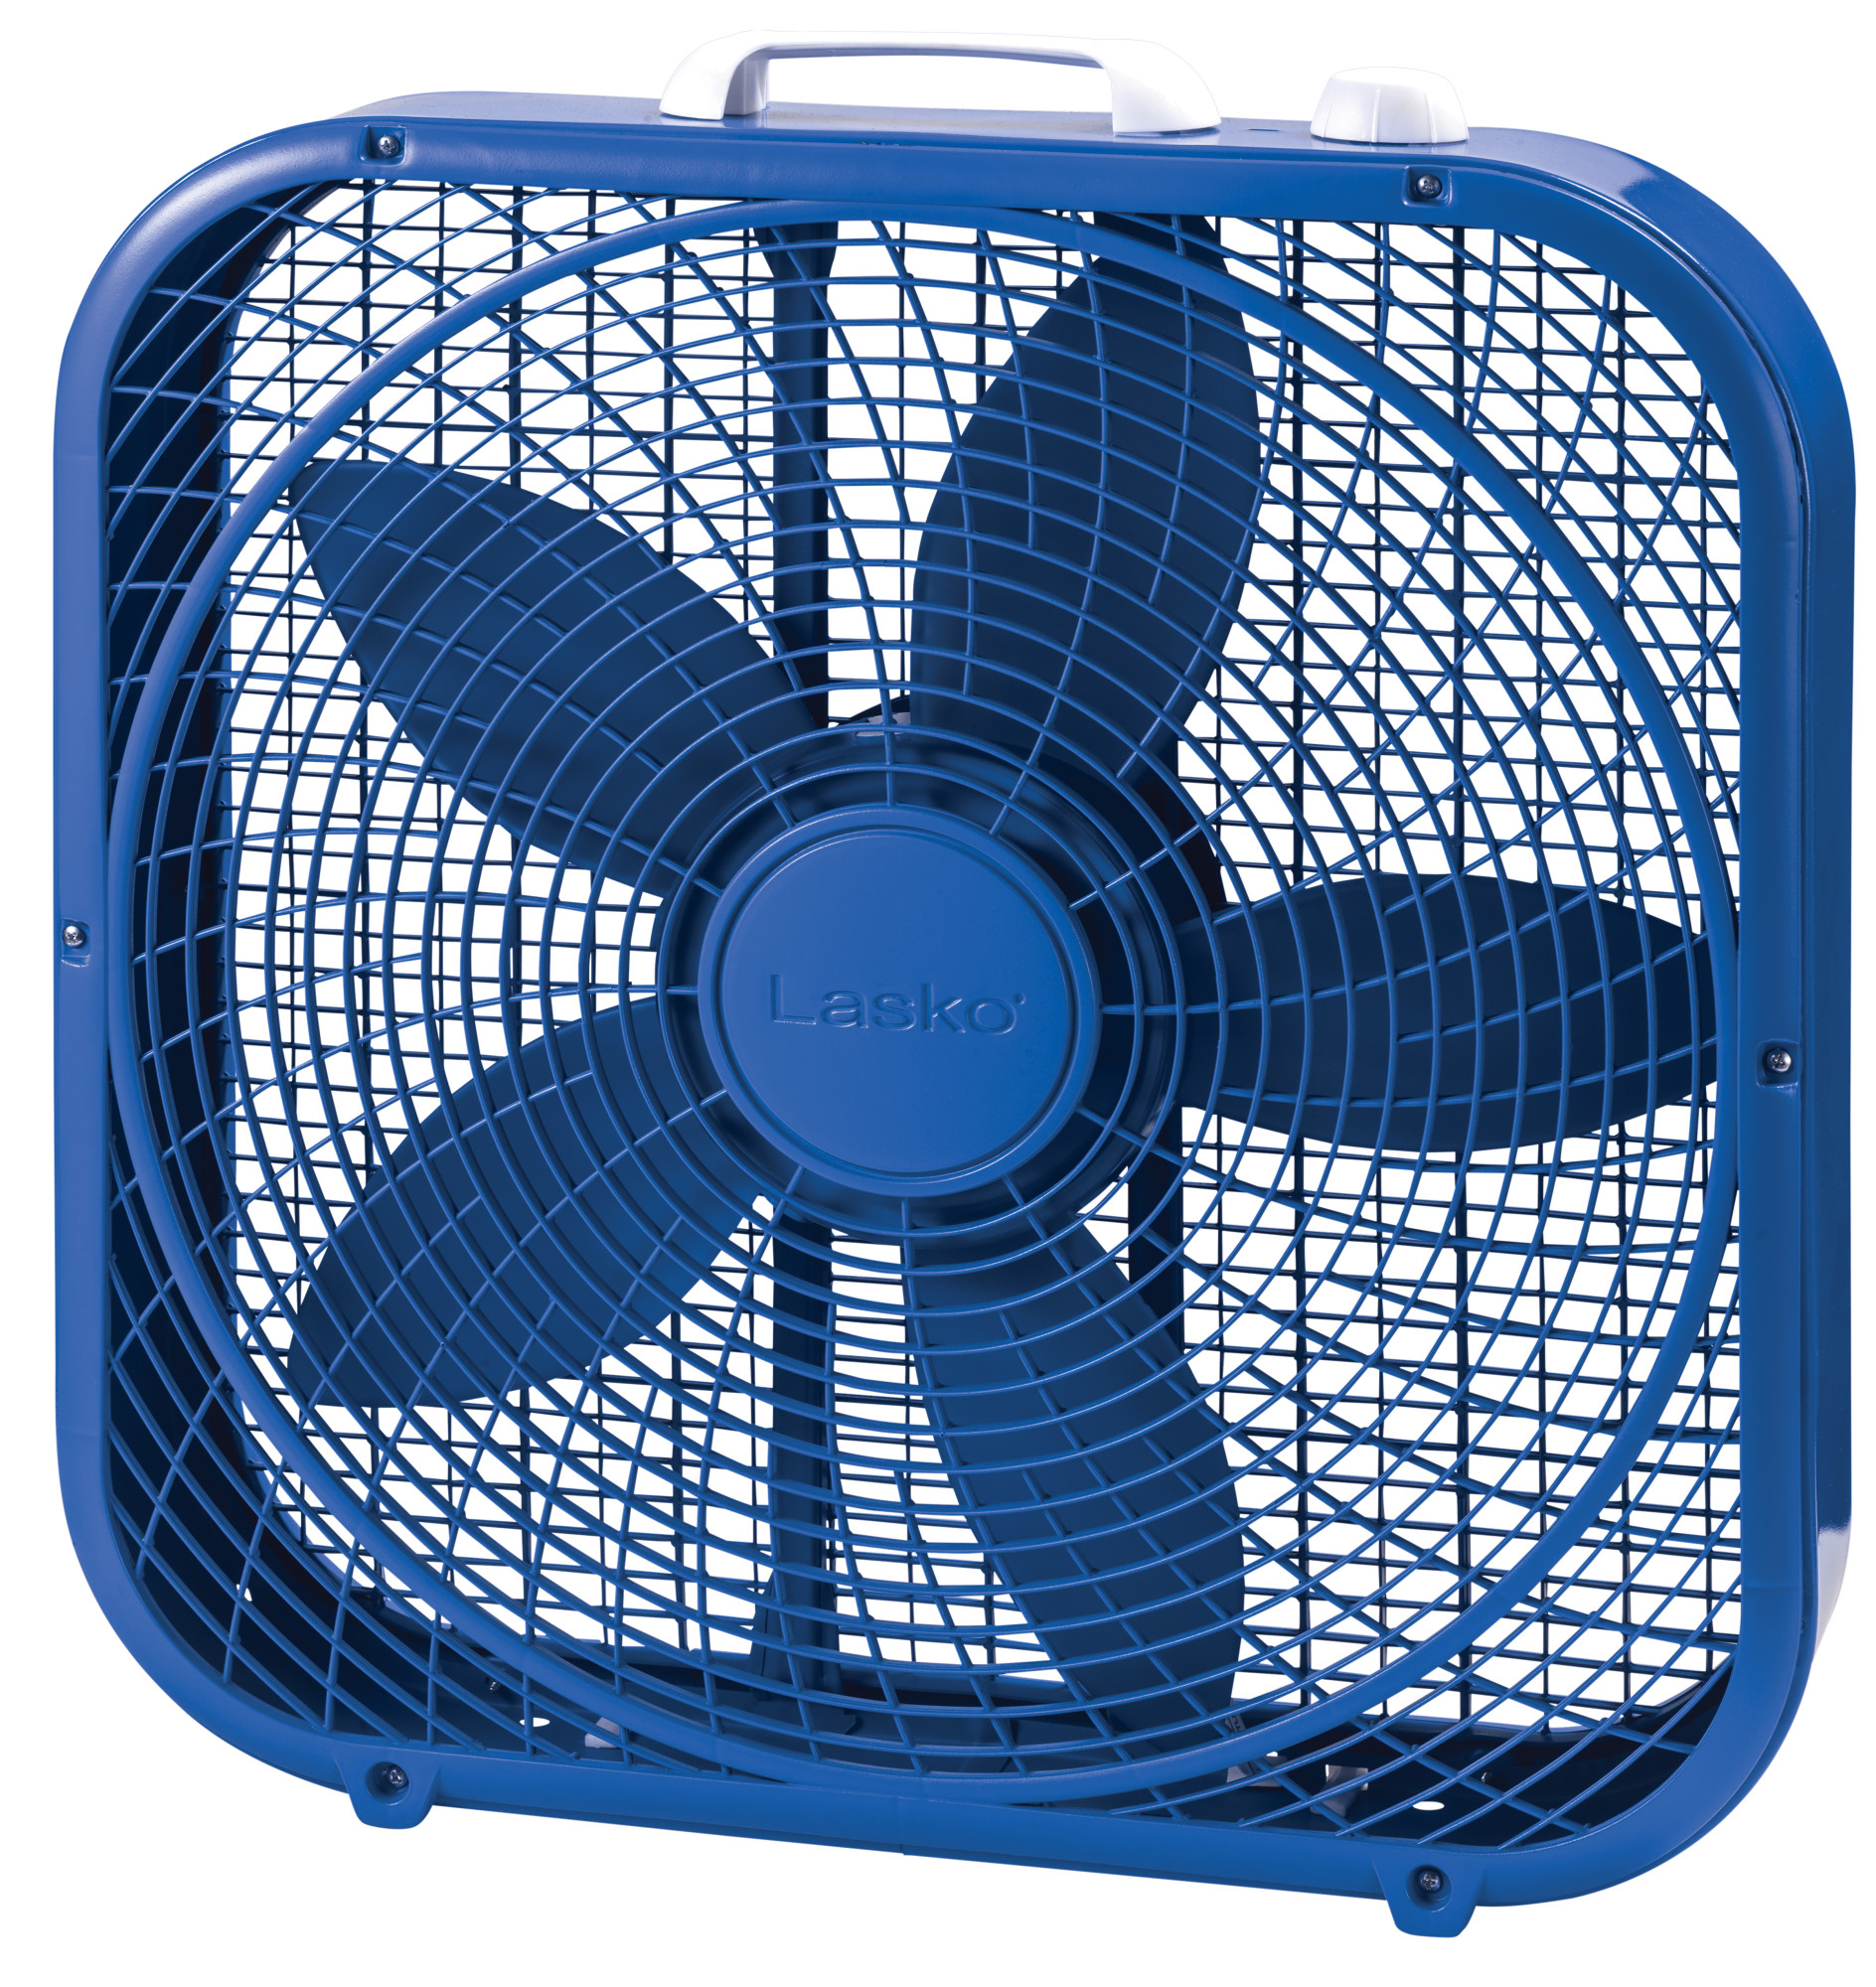 Lasko Cool Colors 20" Energy Efficient Box Fan, 3 Speeds, 22.5" H, Blue, B20308, New - image 1 of 6